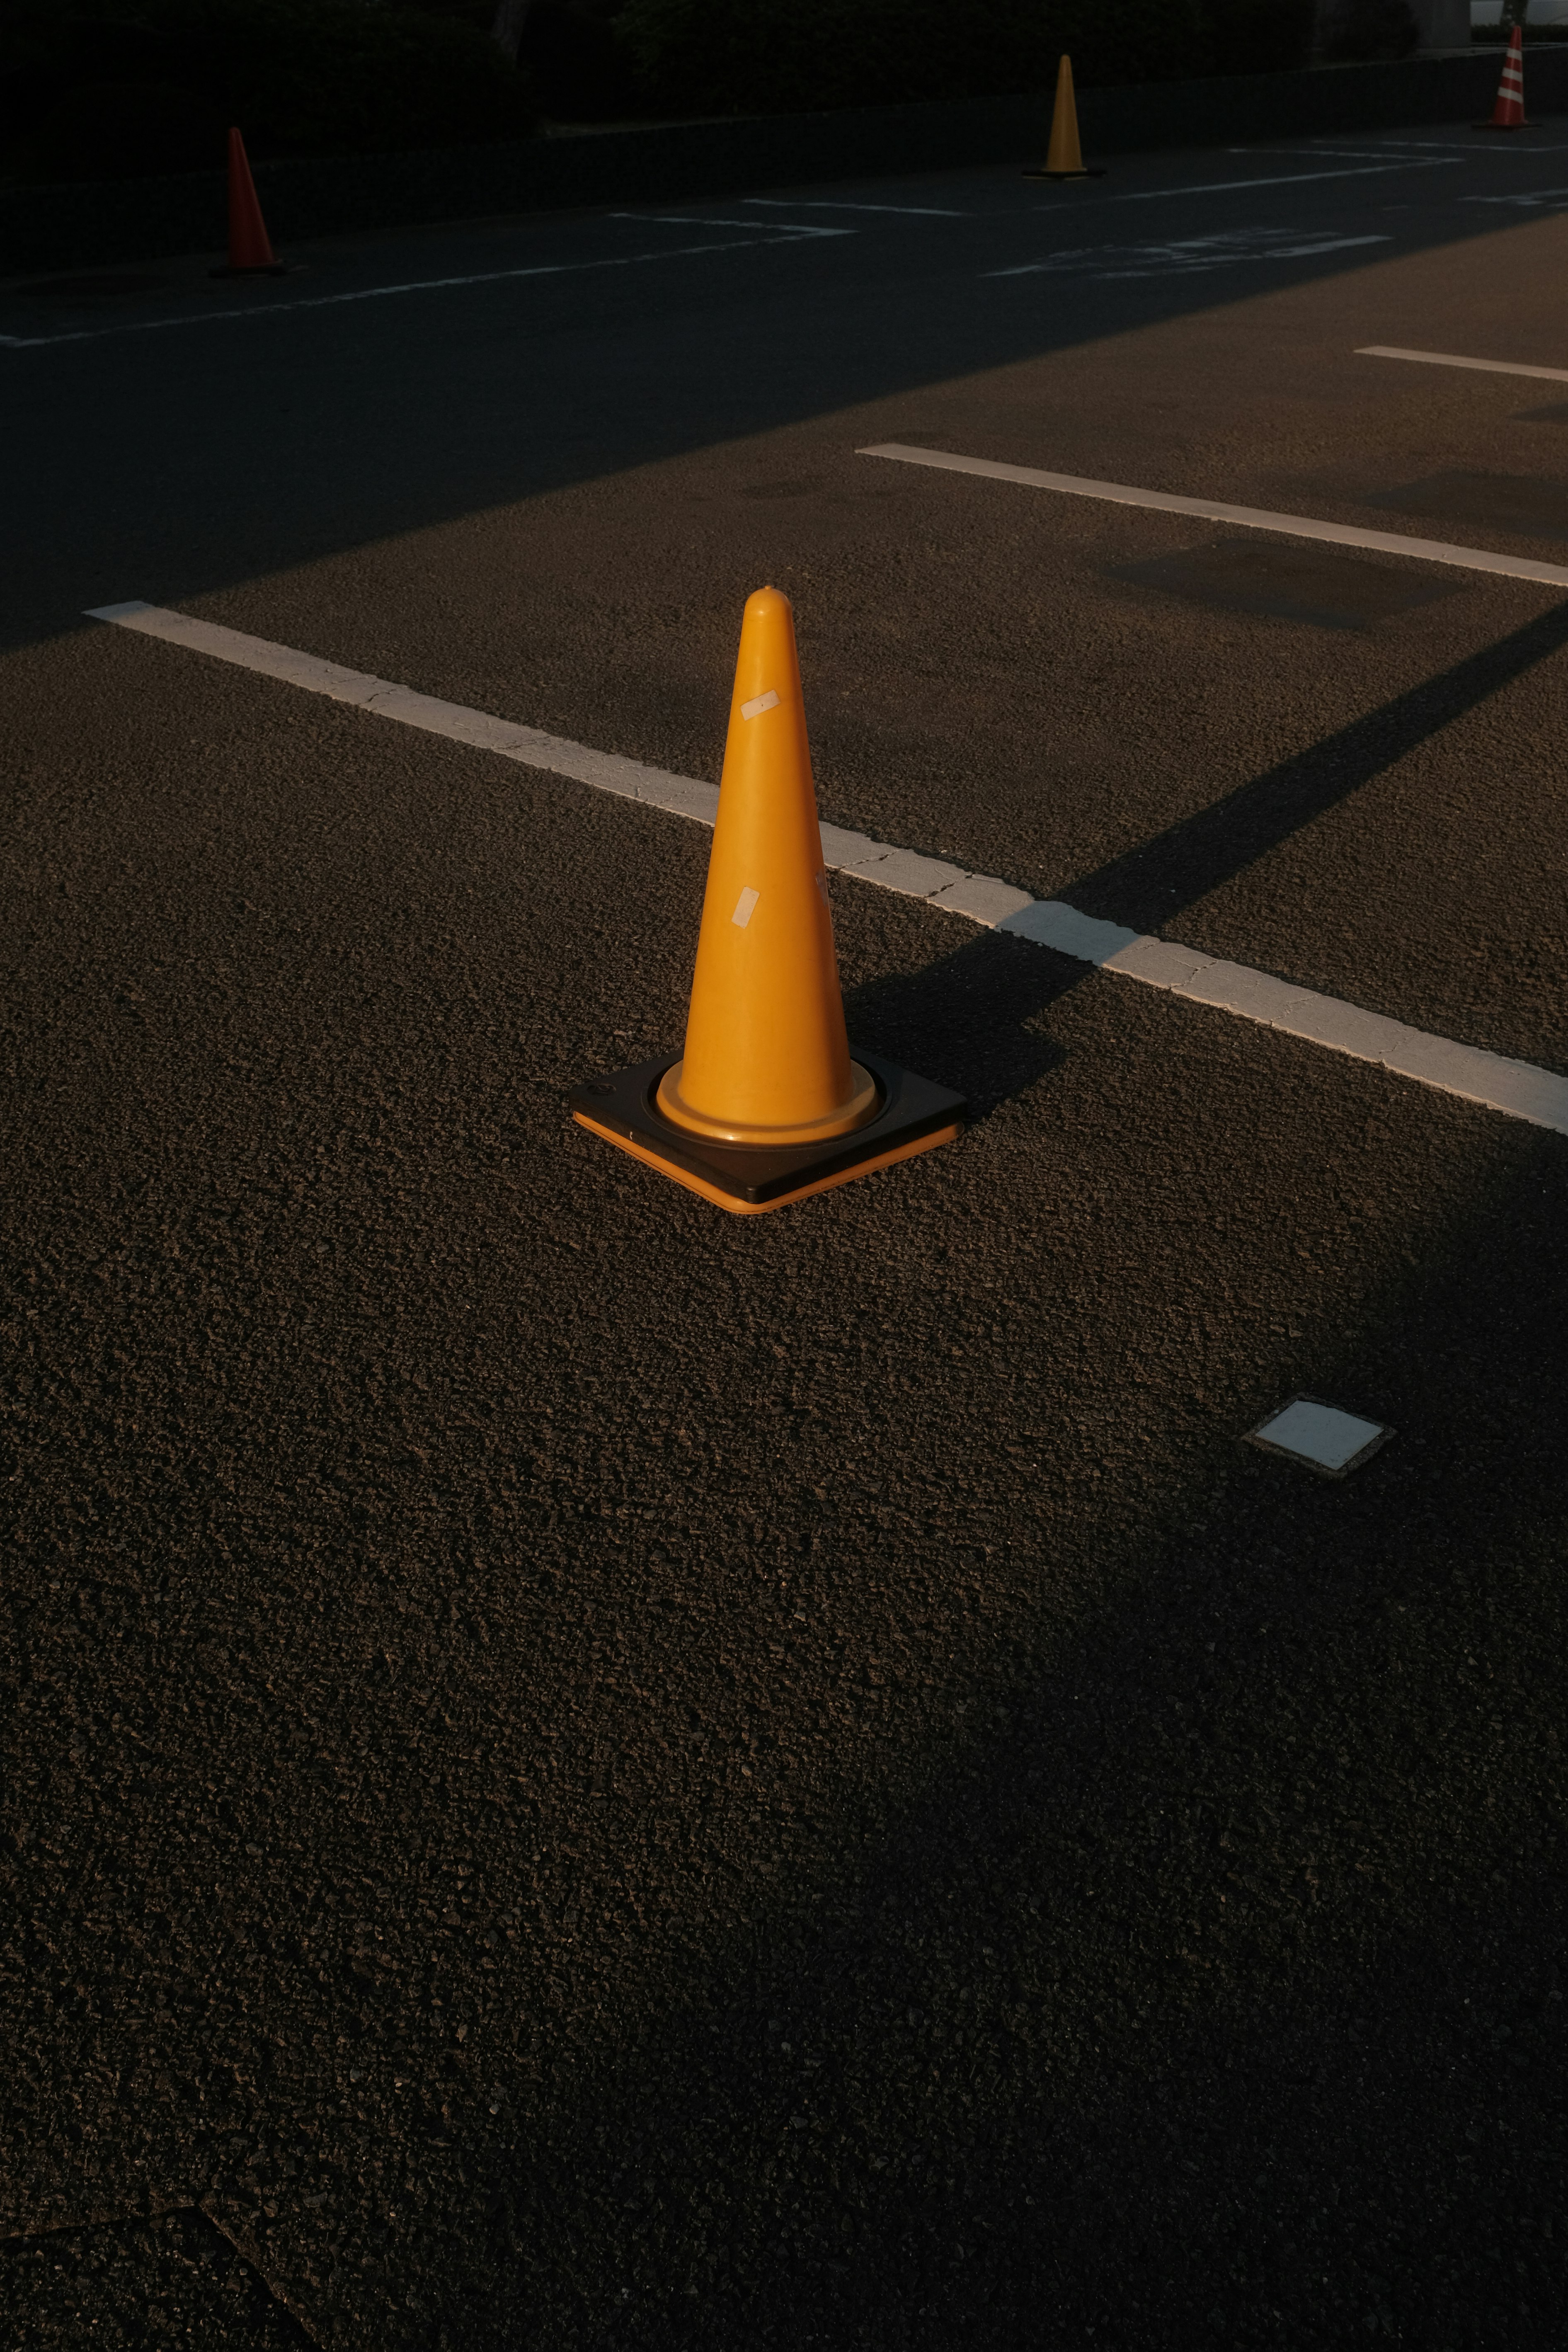 orange and white traffic cone on black asphalt road